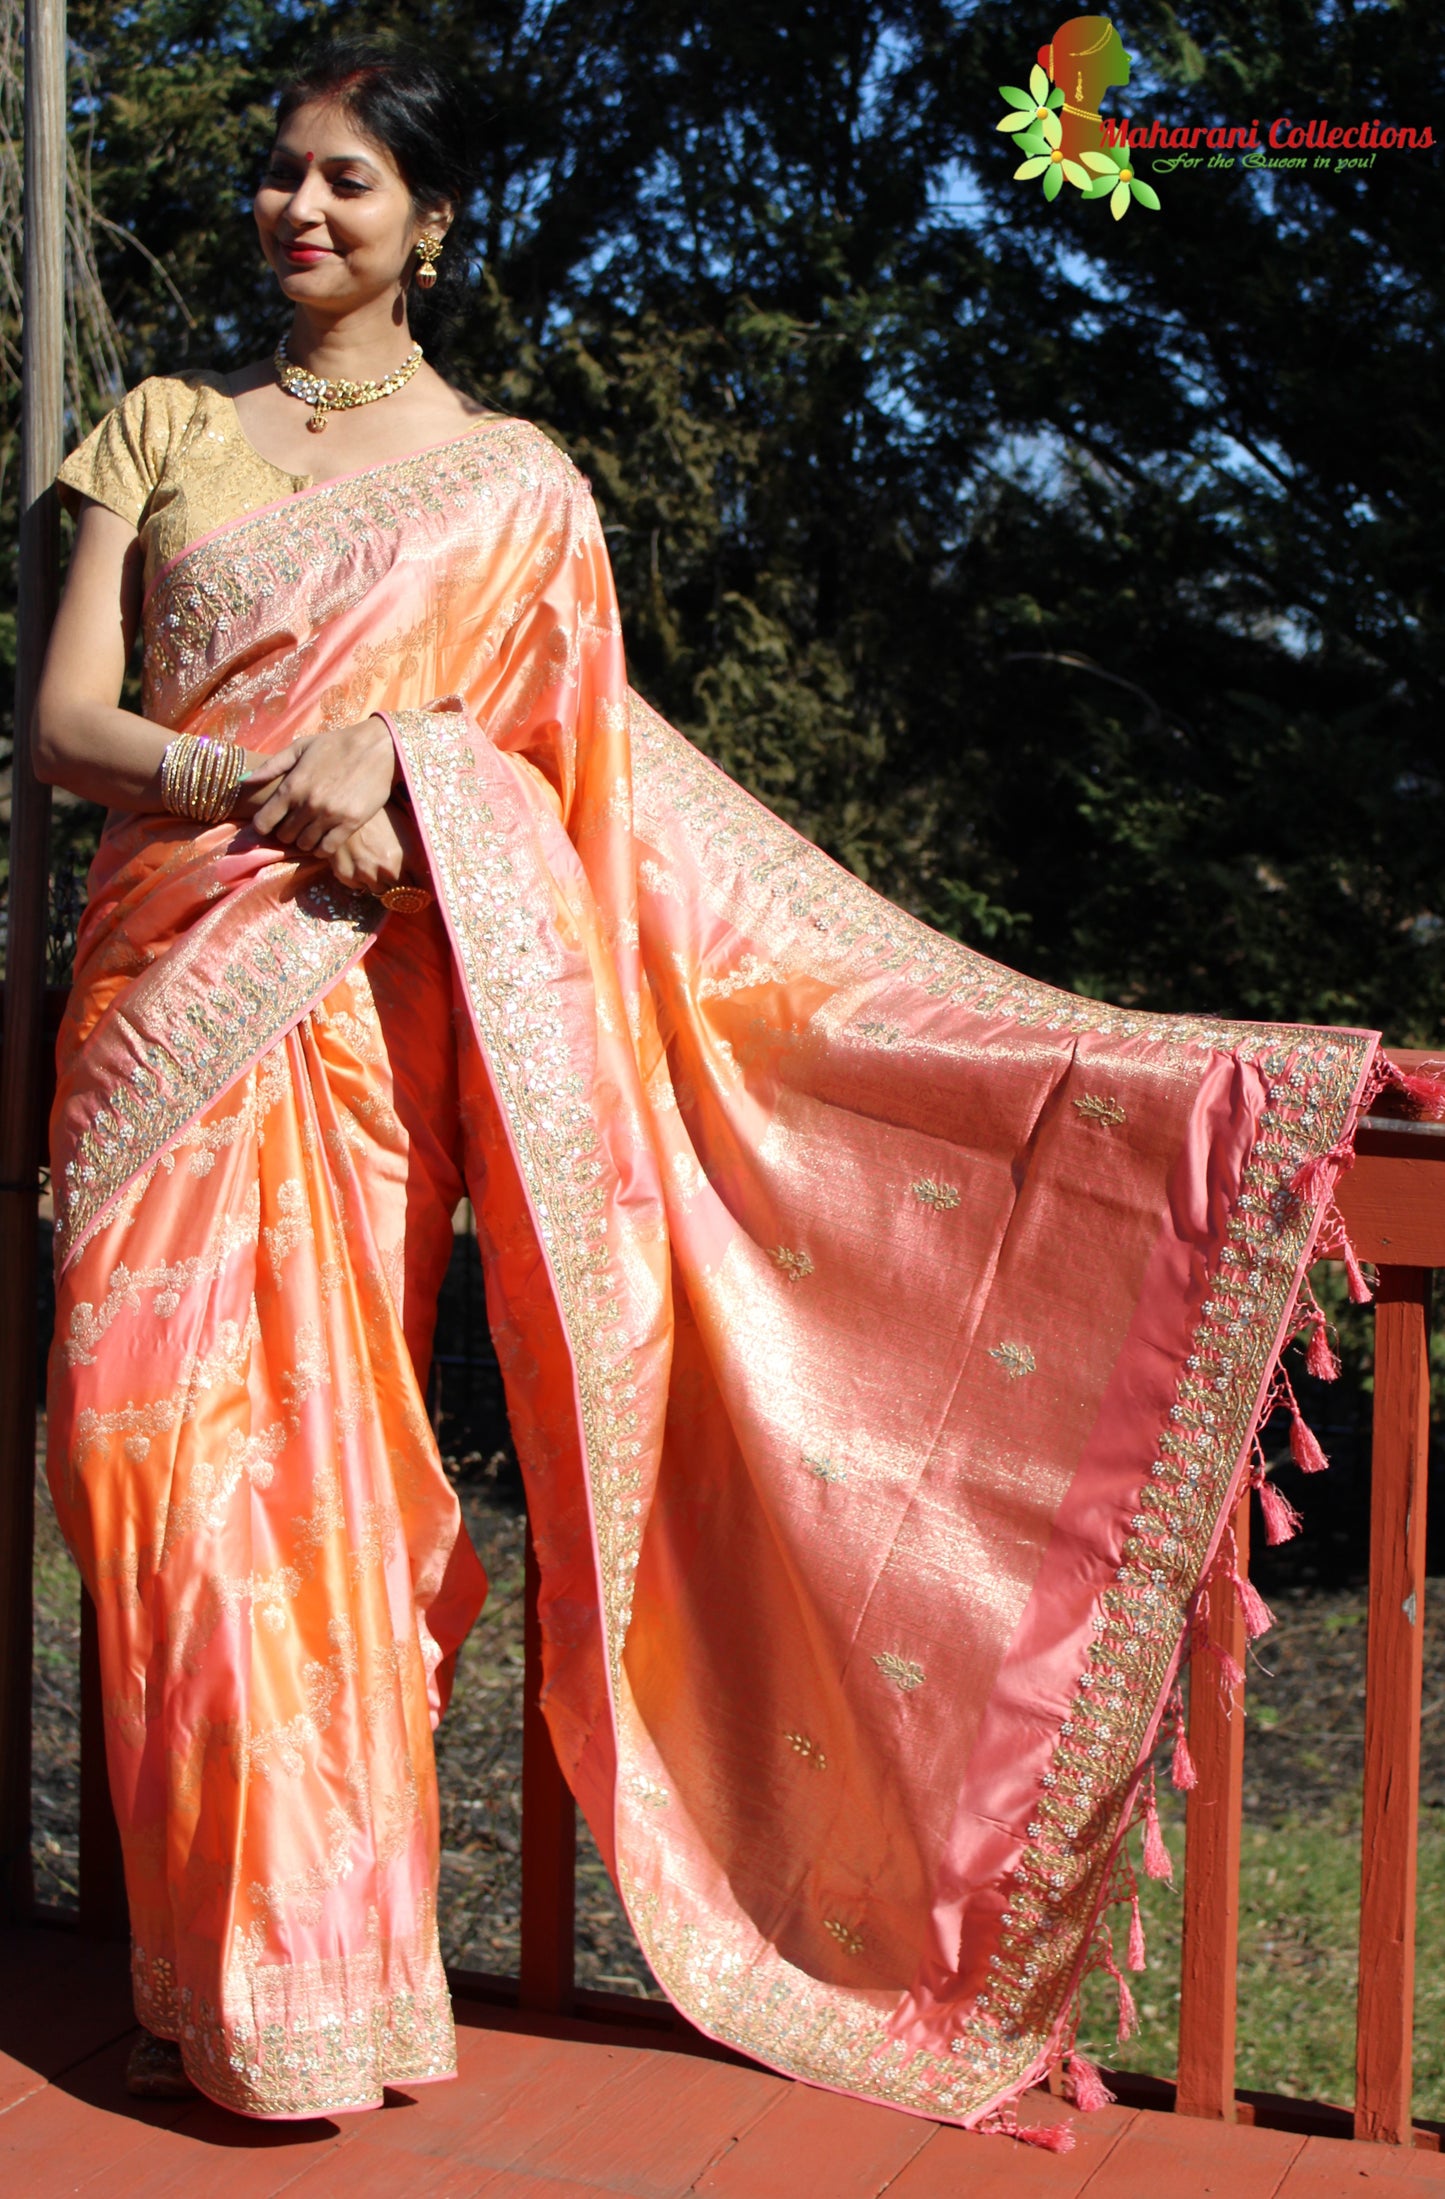 Maharani's Pure Banarasi Silk Rangkat Saree - Shades of Peach/Pink/Orange (with Stitched Petticoat)